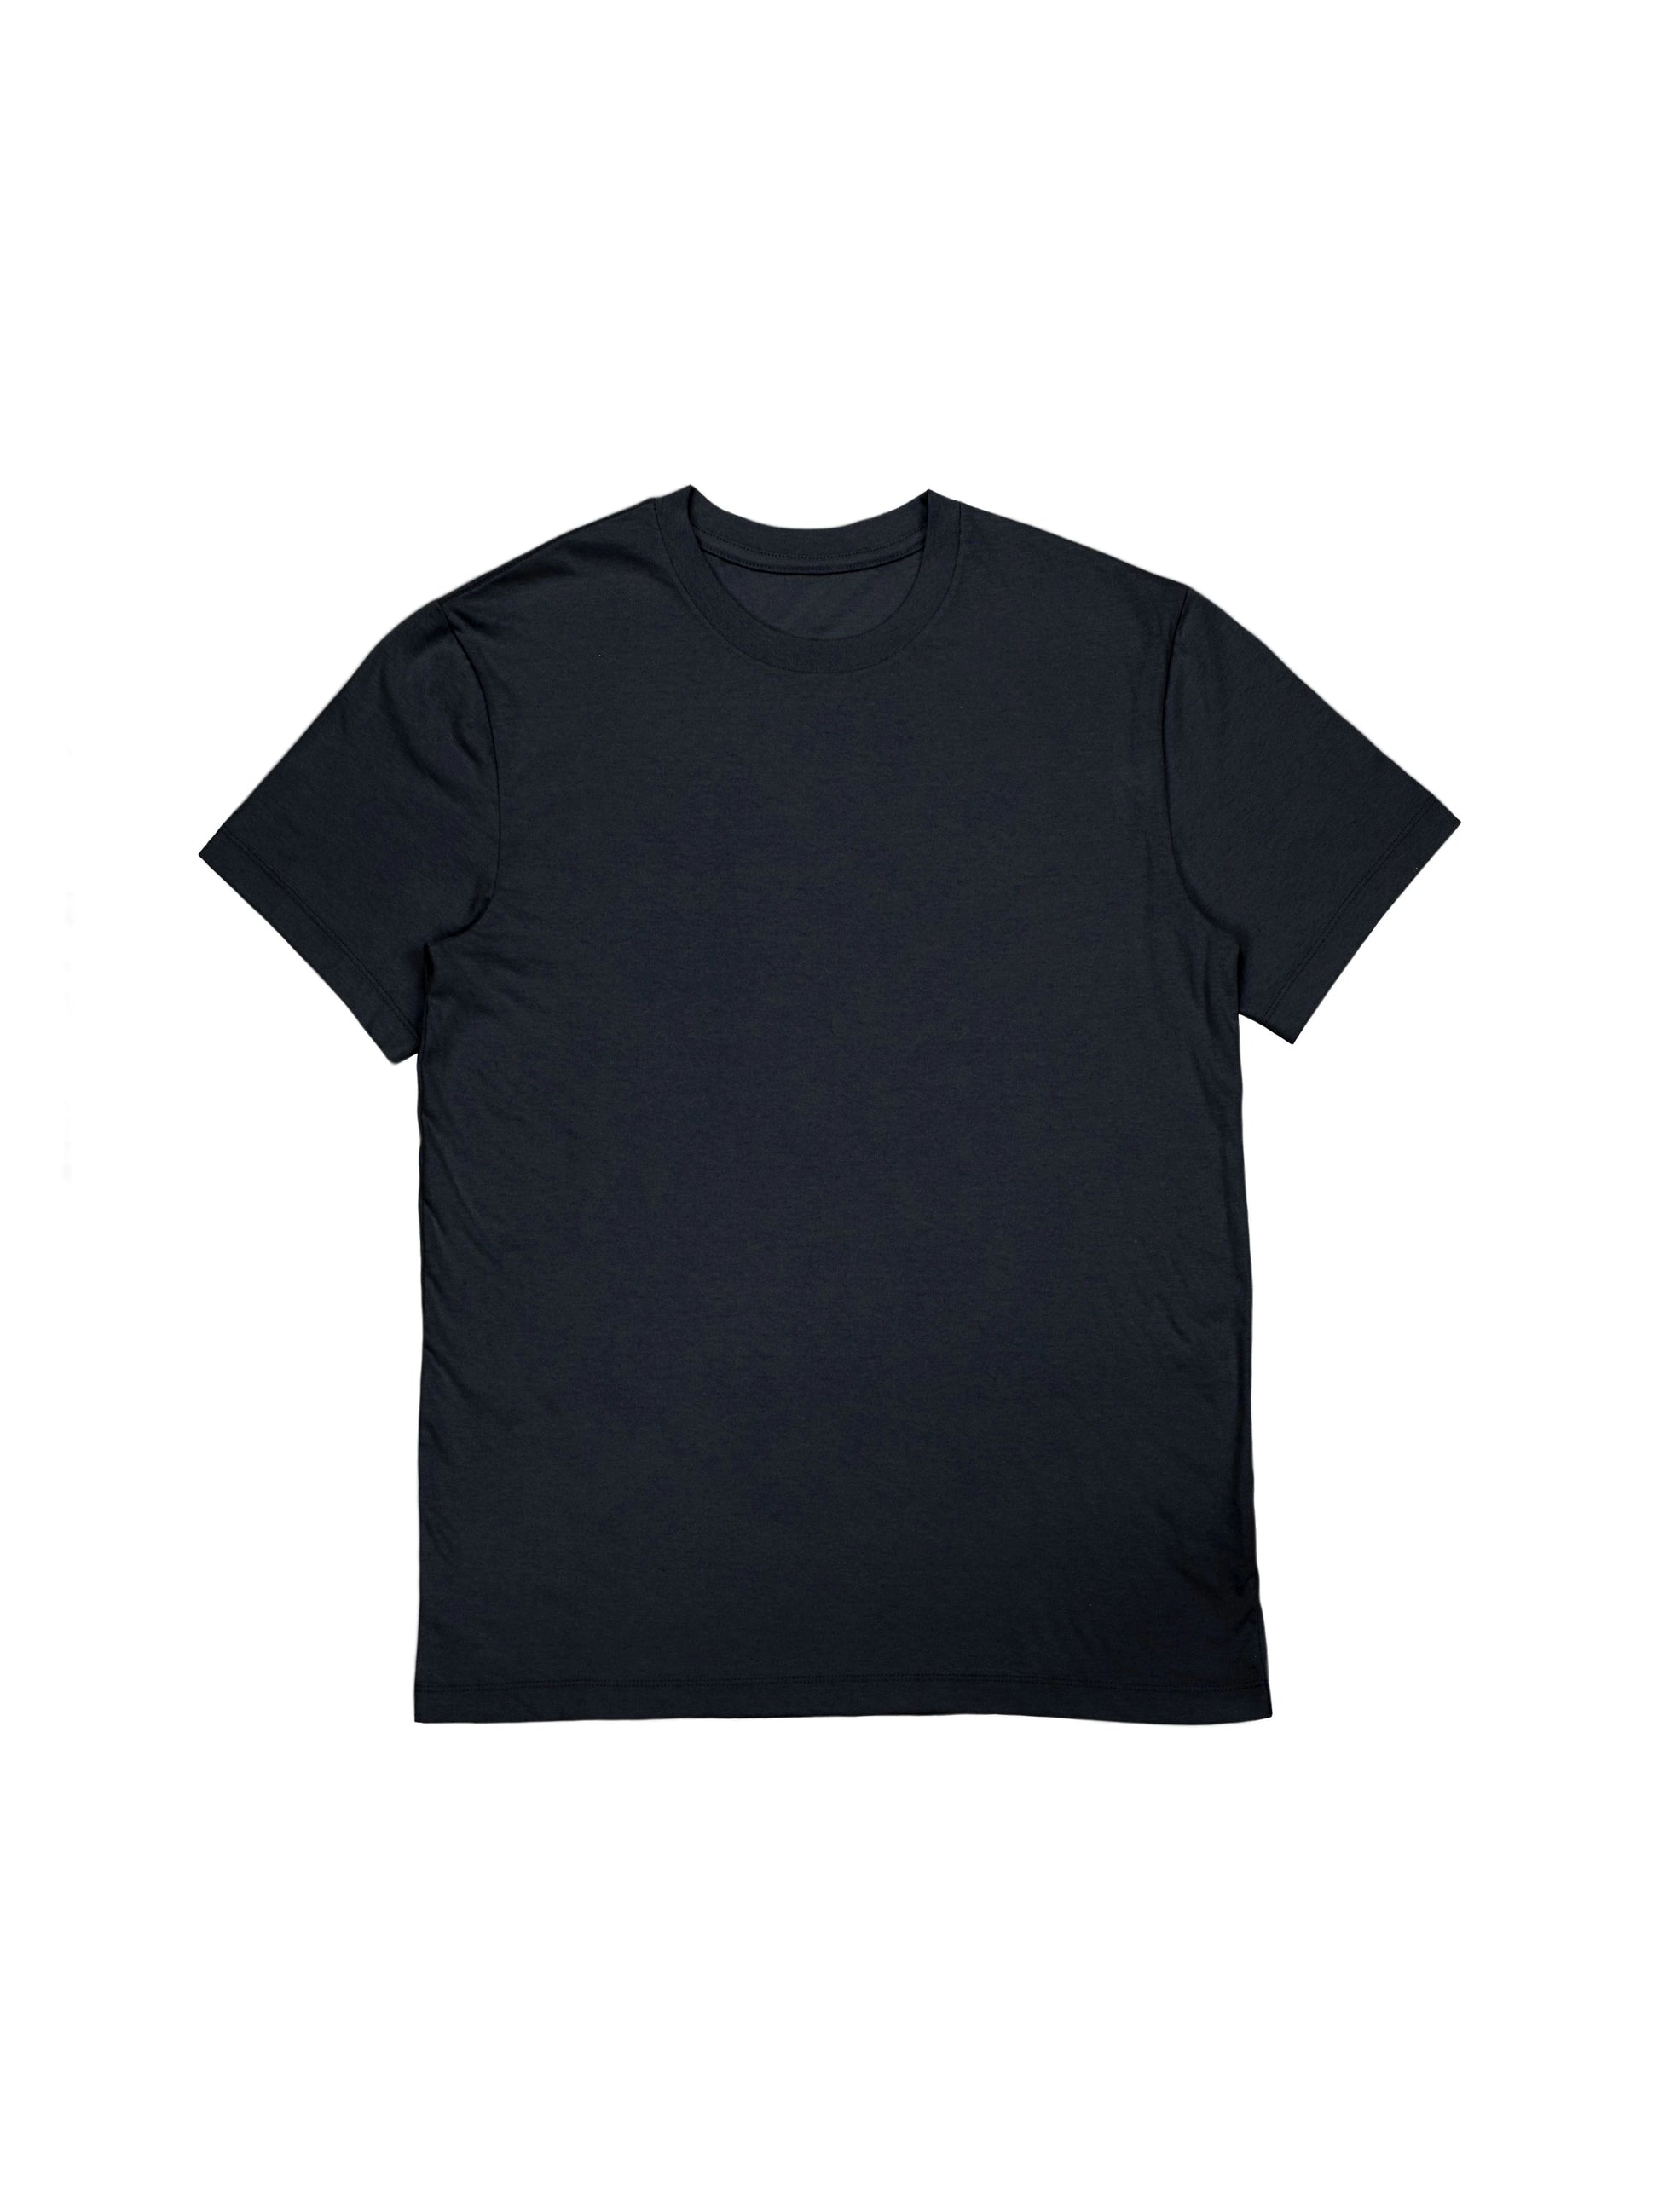 Boxy T-shirt - Black Cotton